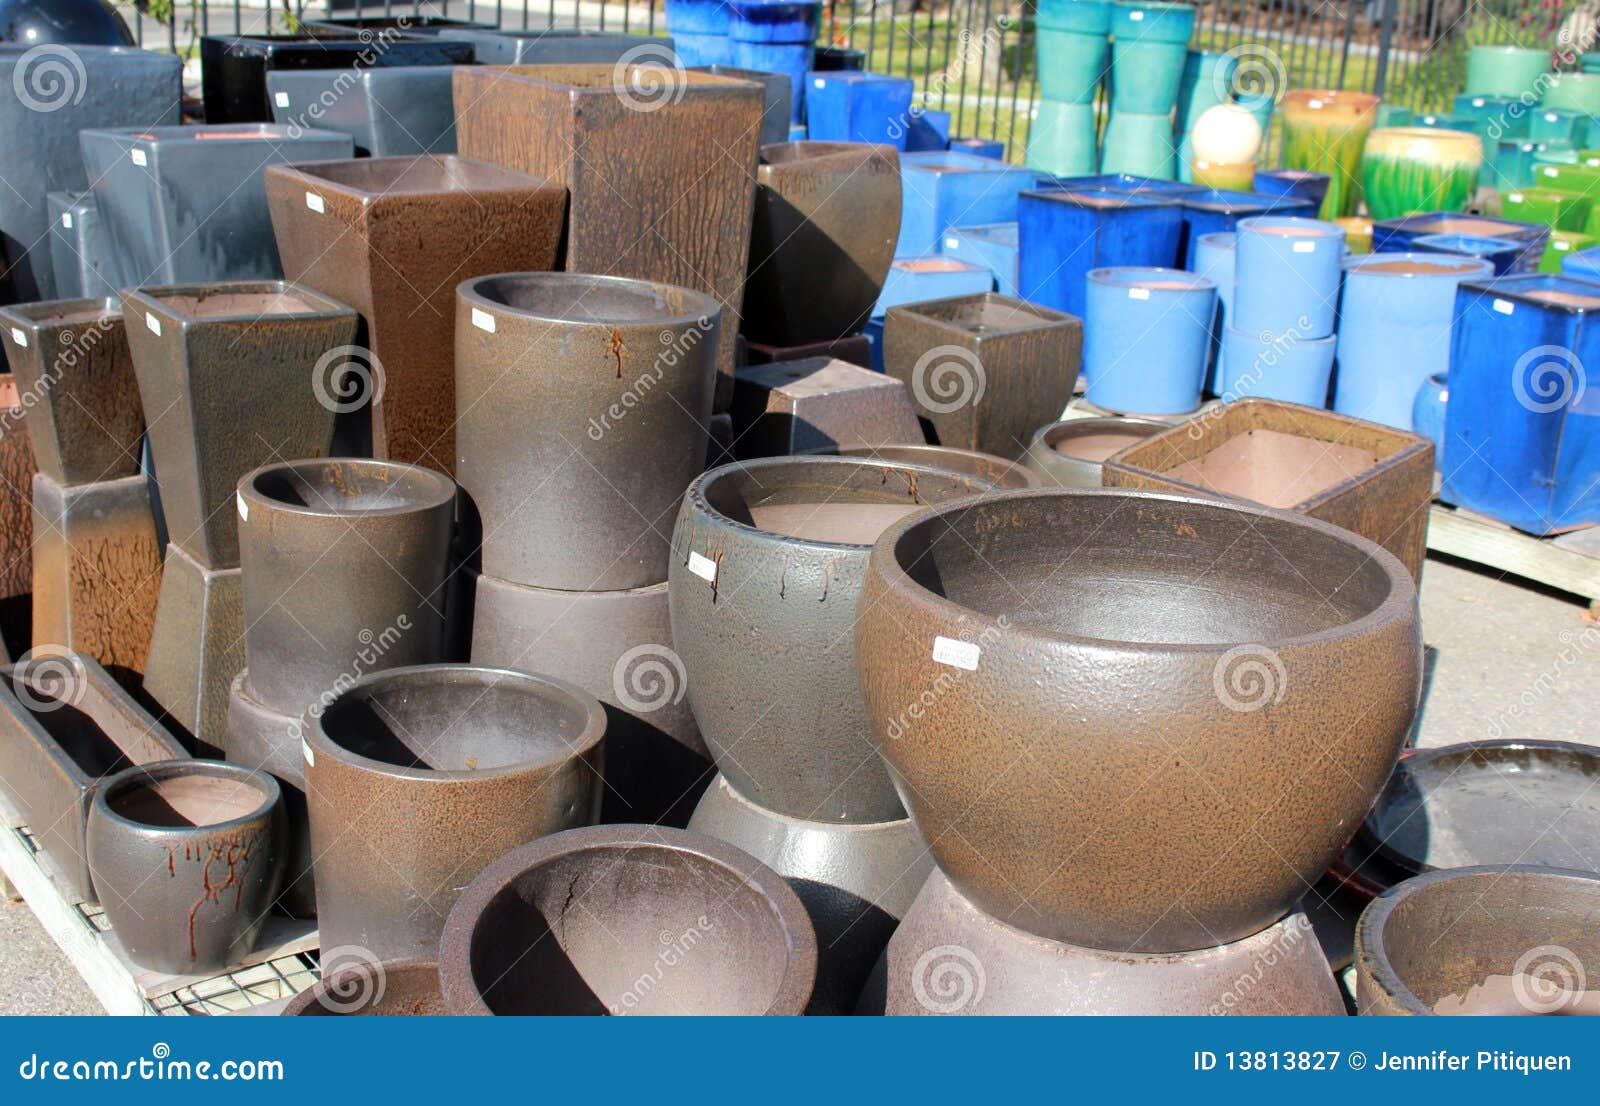 round planter pots